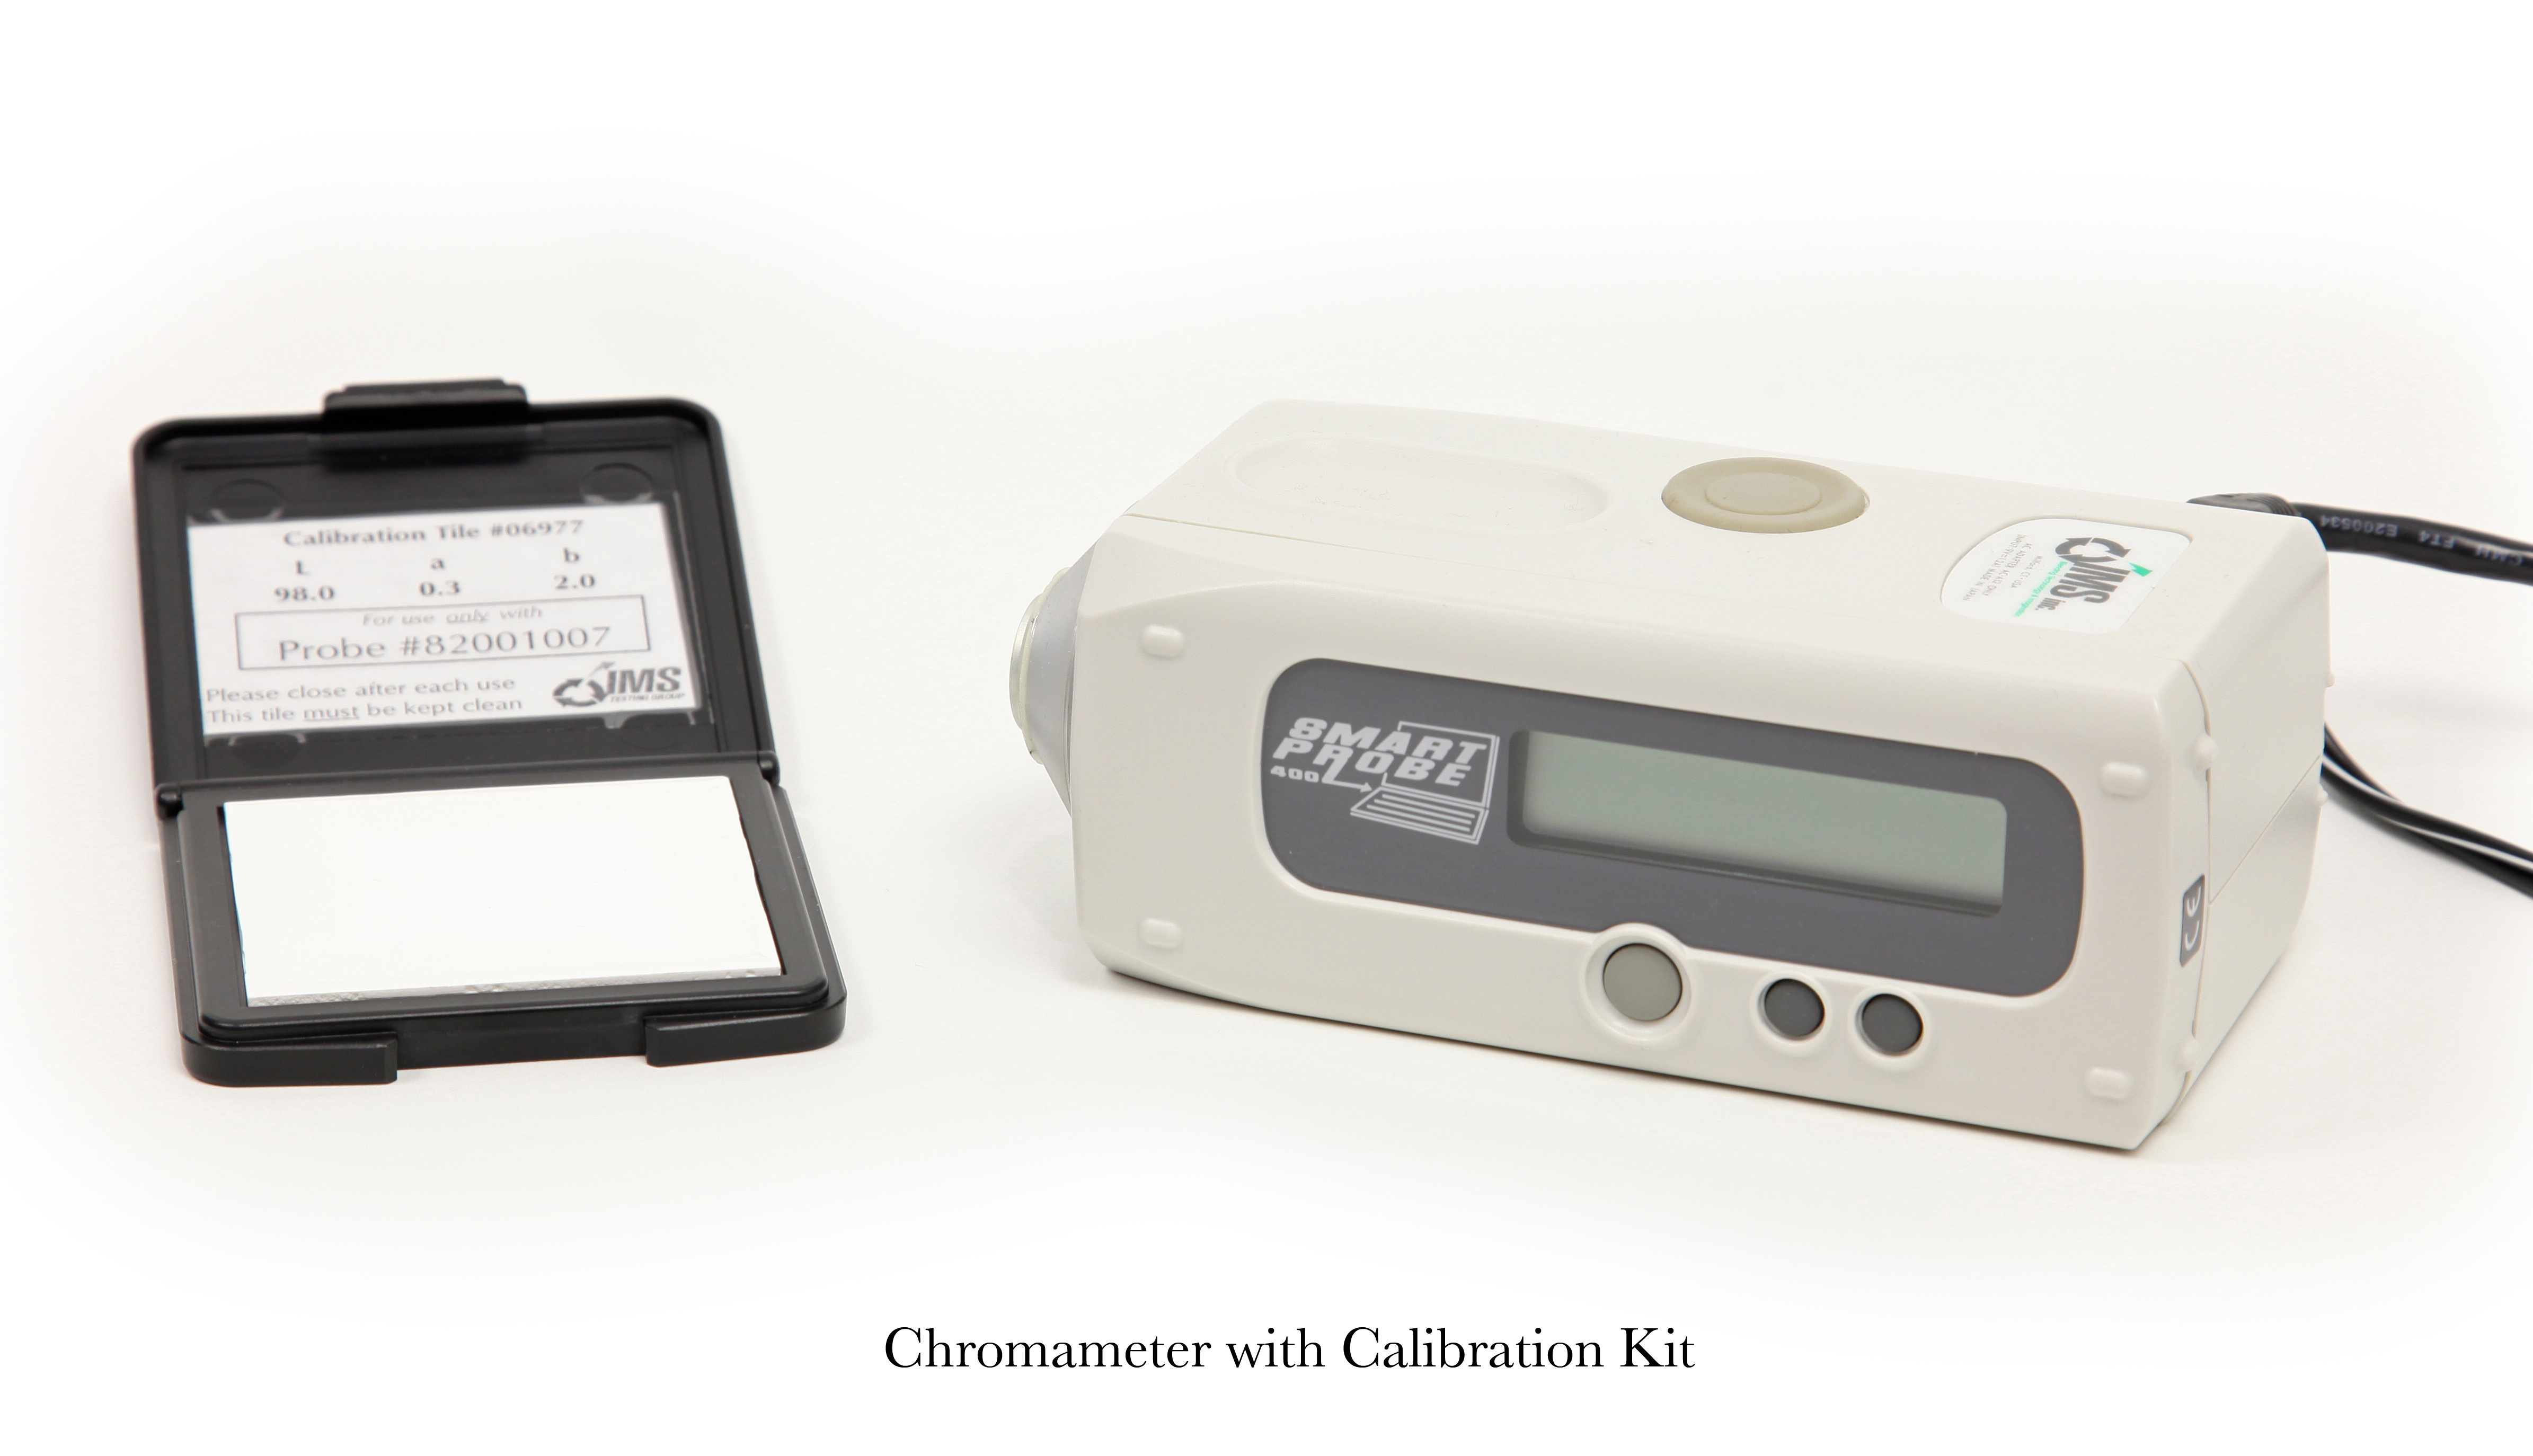 Chromameter with Calibration Kit